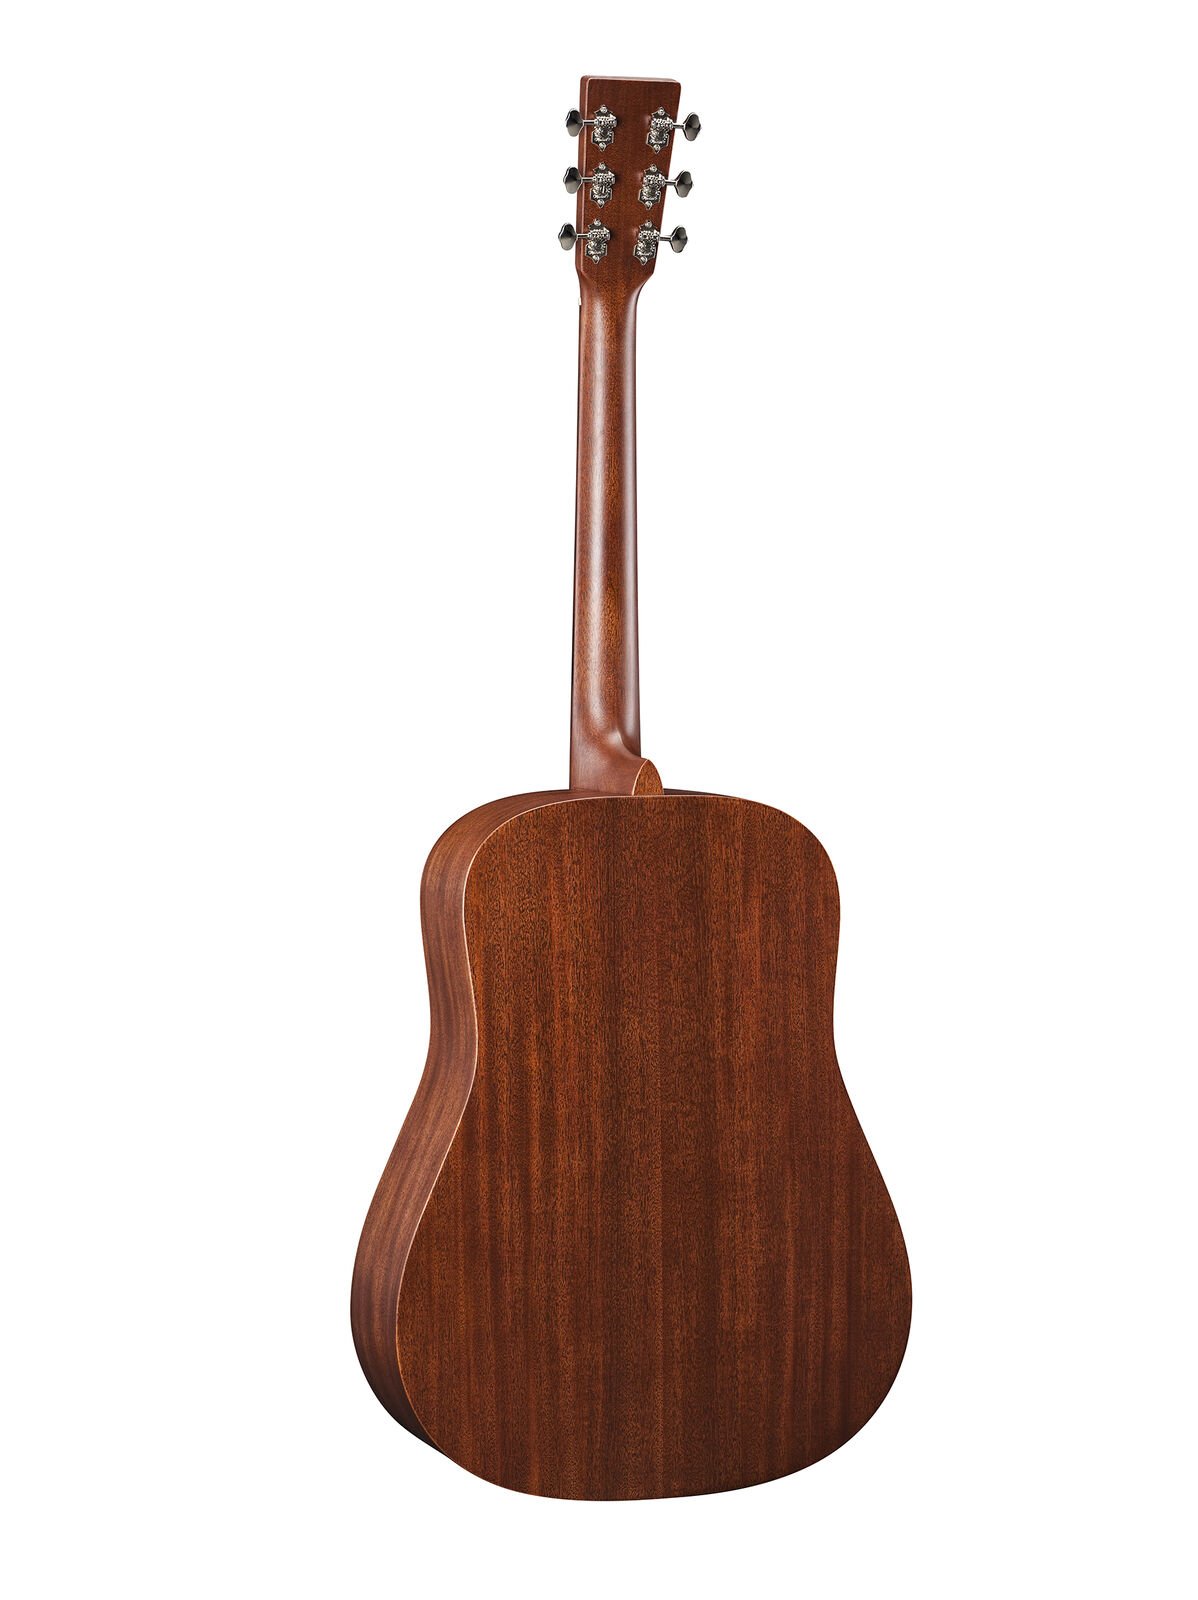 Martin D-15M Mahogany Acoustic Guitar w/Soft-Shell